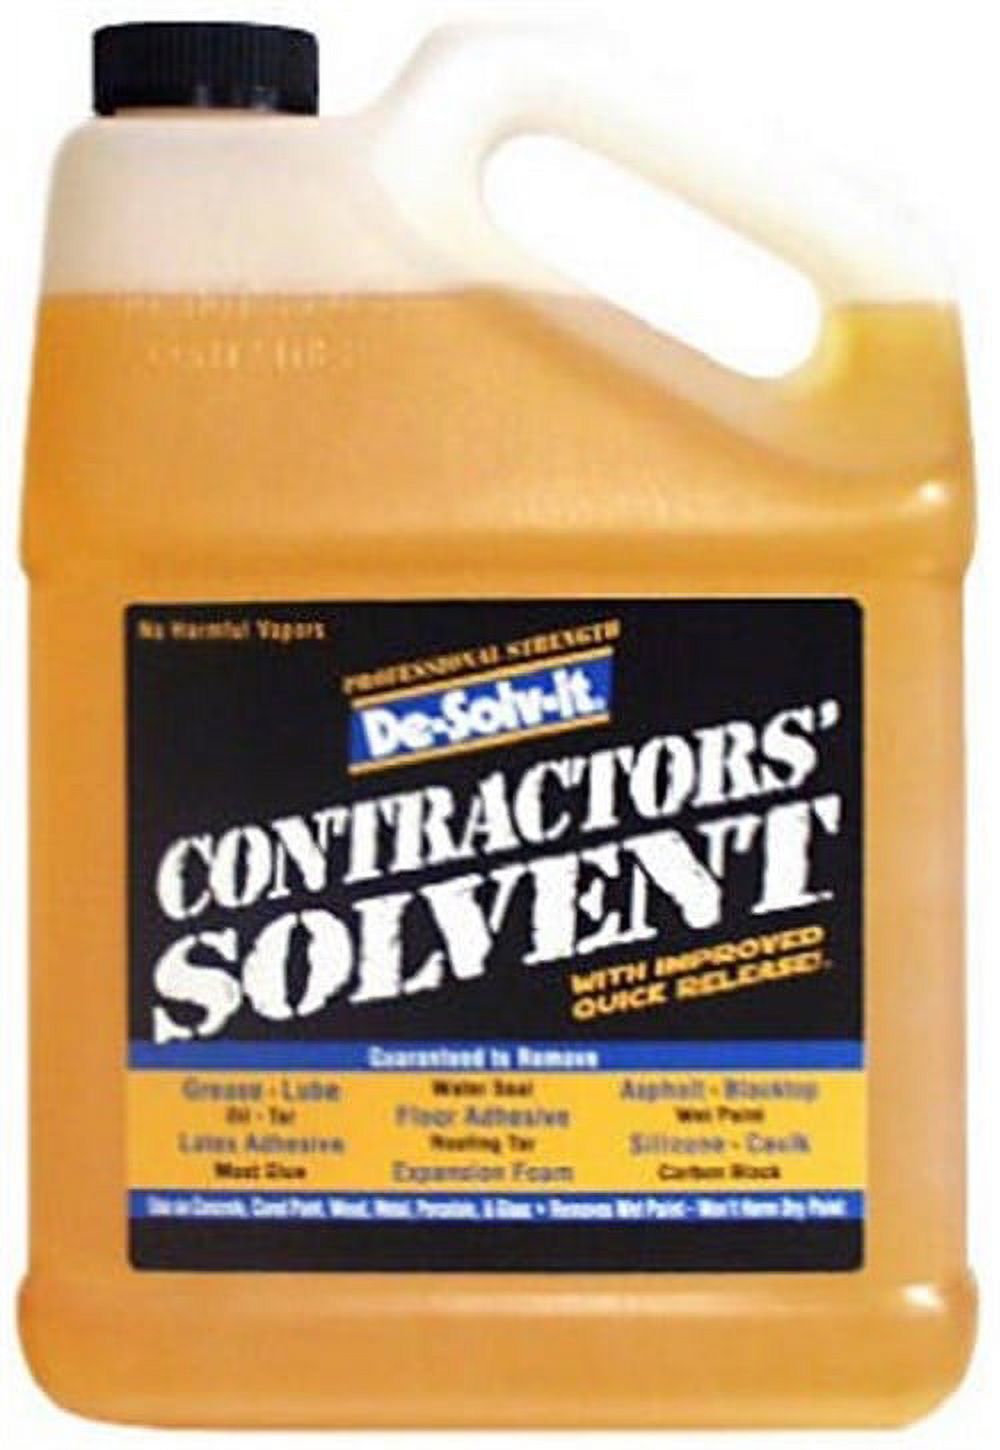 De-solv-it Pro Contractors Solvent 1 Gallon Refill - image 3 of 3